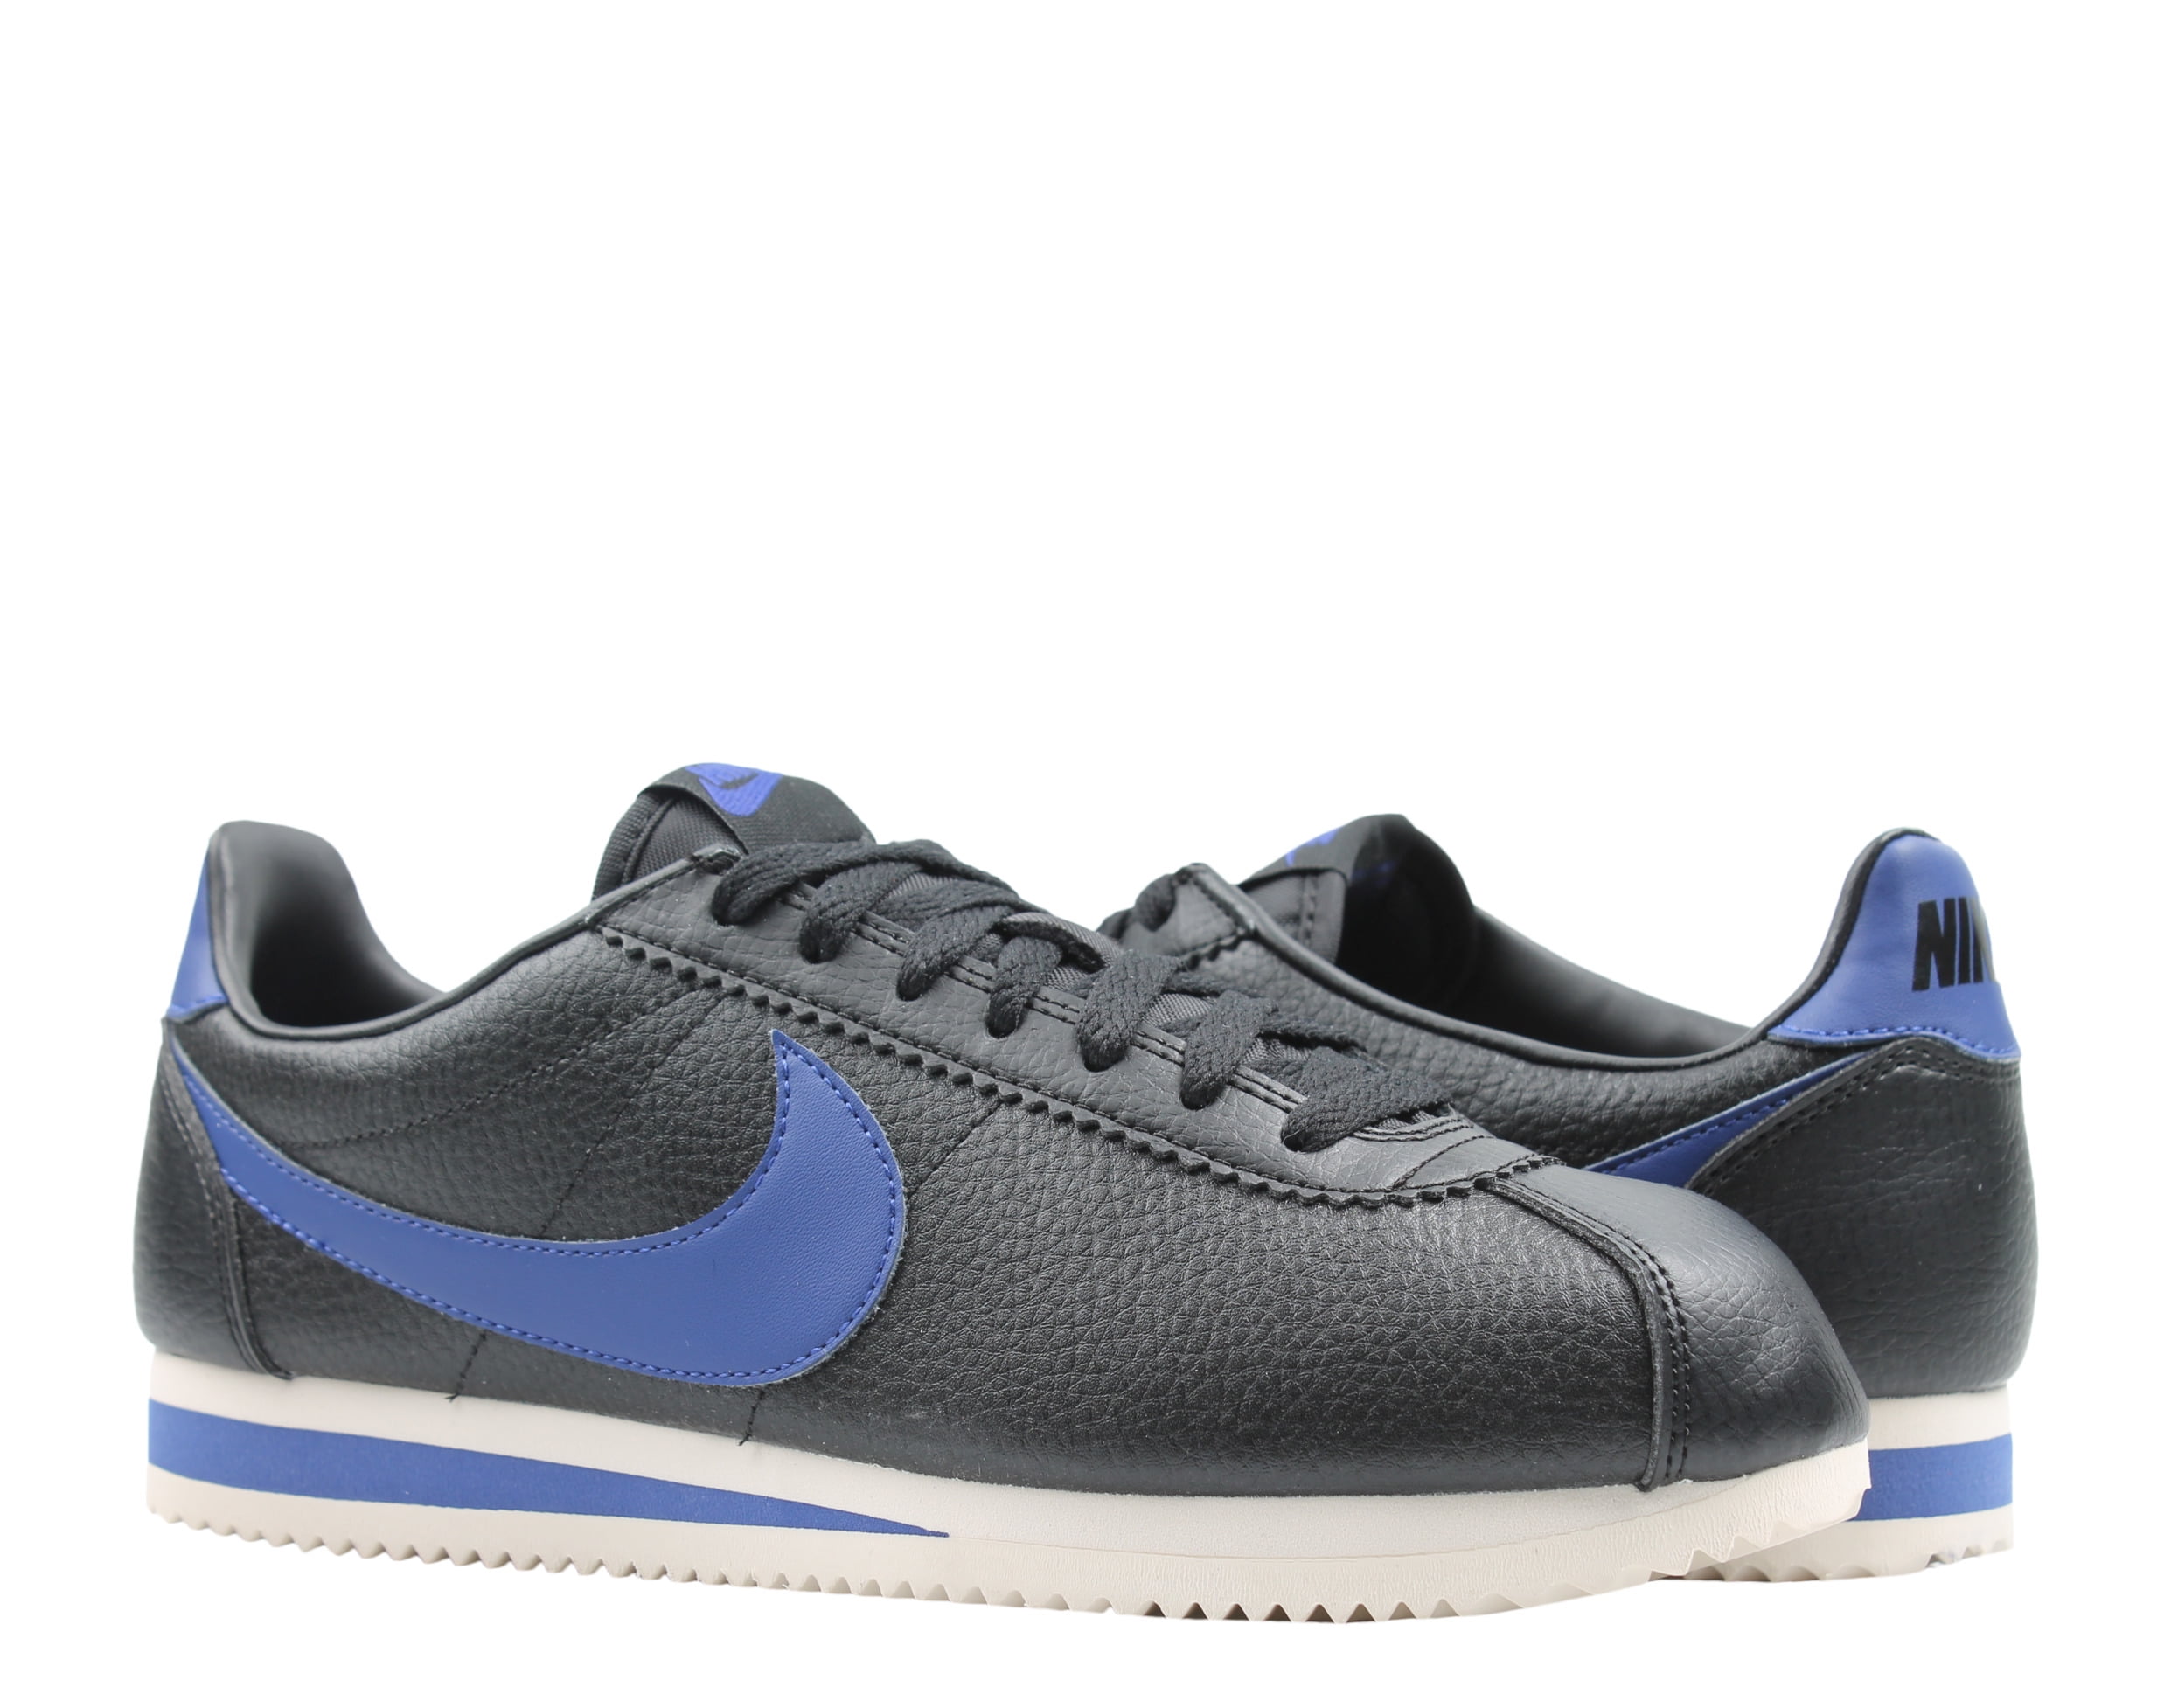 Nike Classic Cortez Leather Black/Royal Blue Men's Running Shoes 749571-003